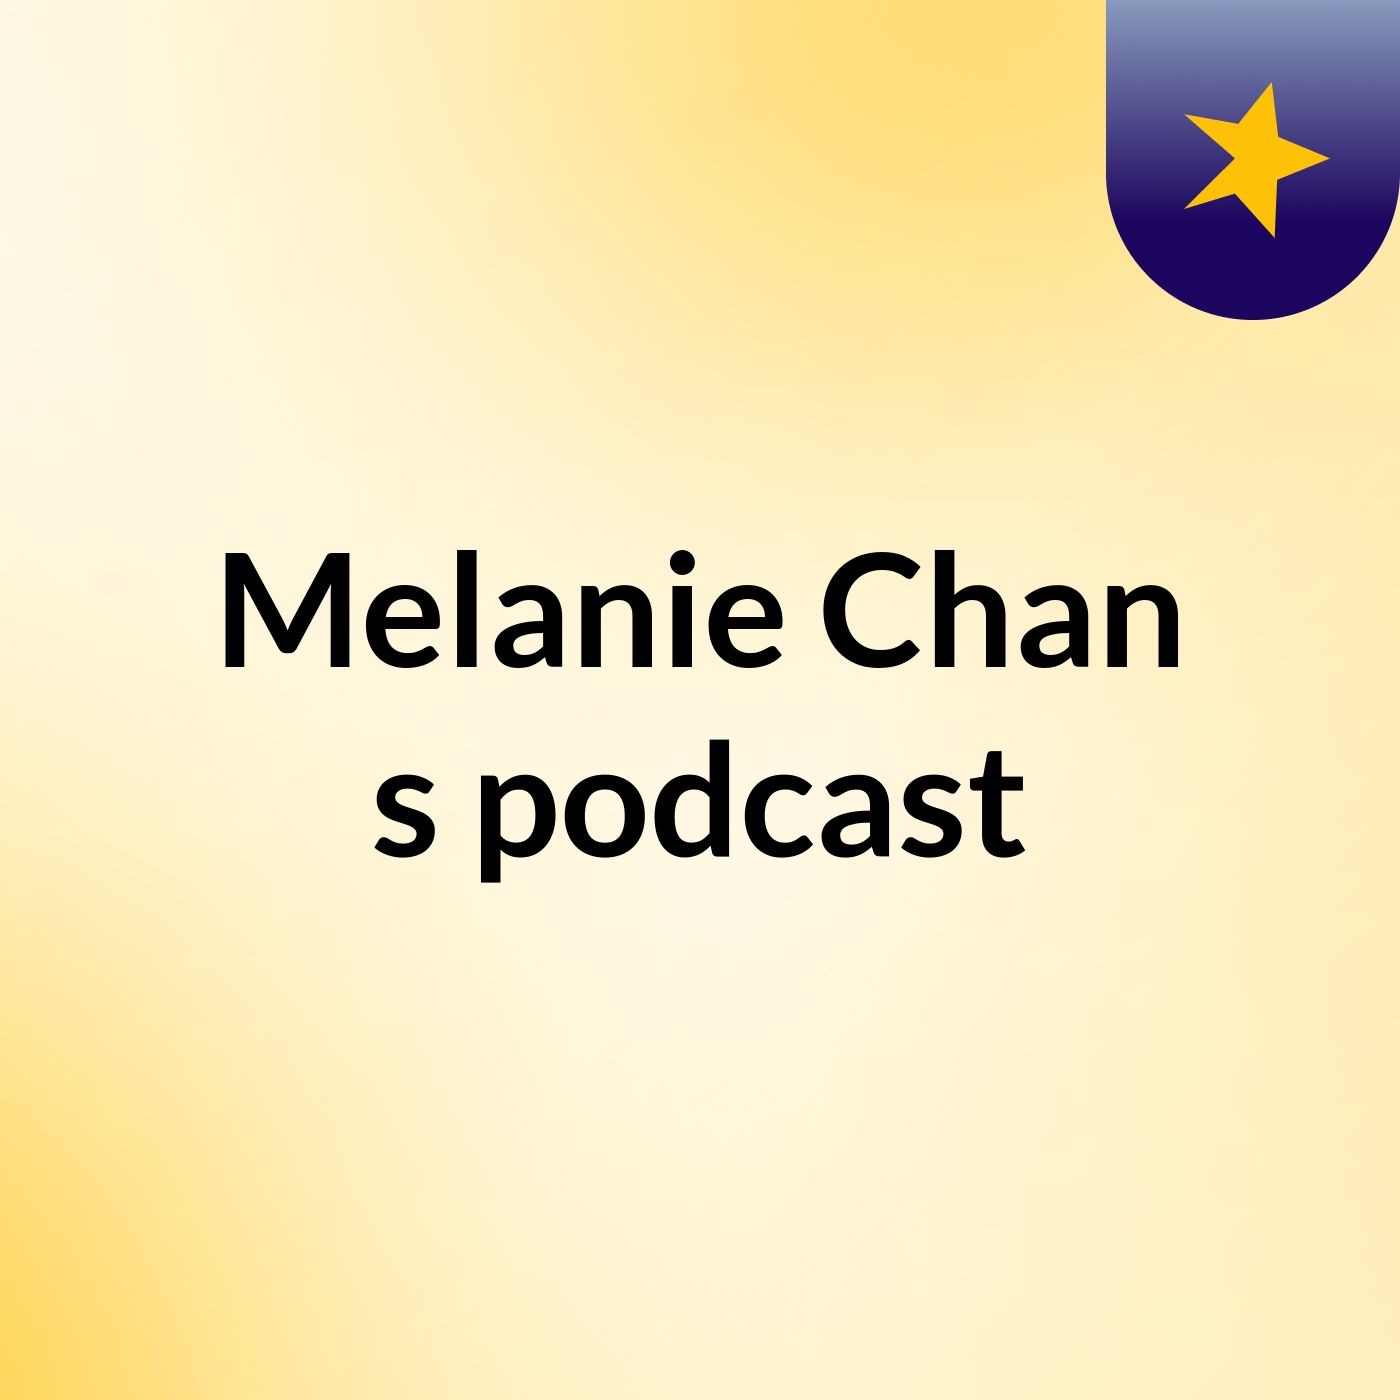 Melanie Chan's podcast